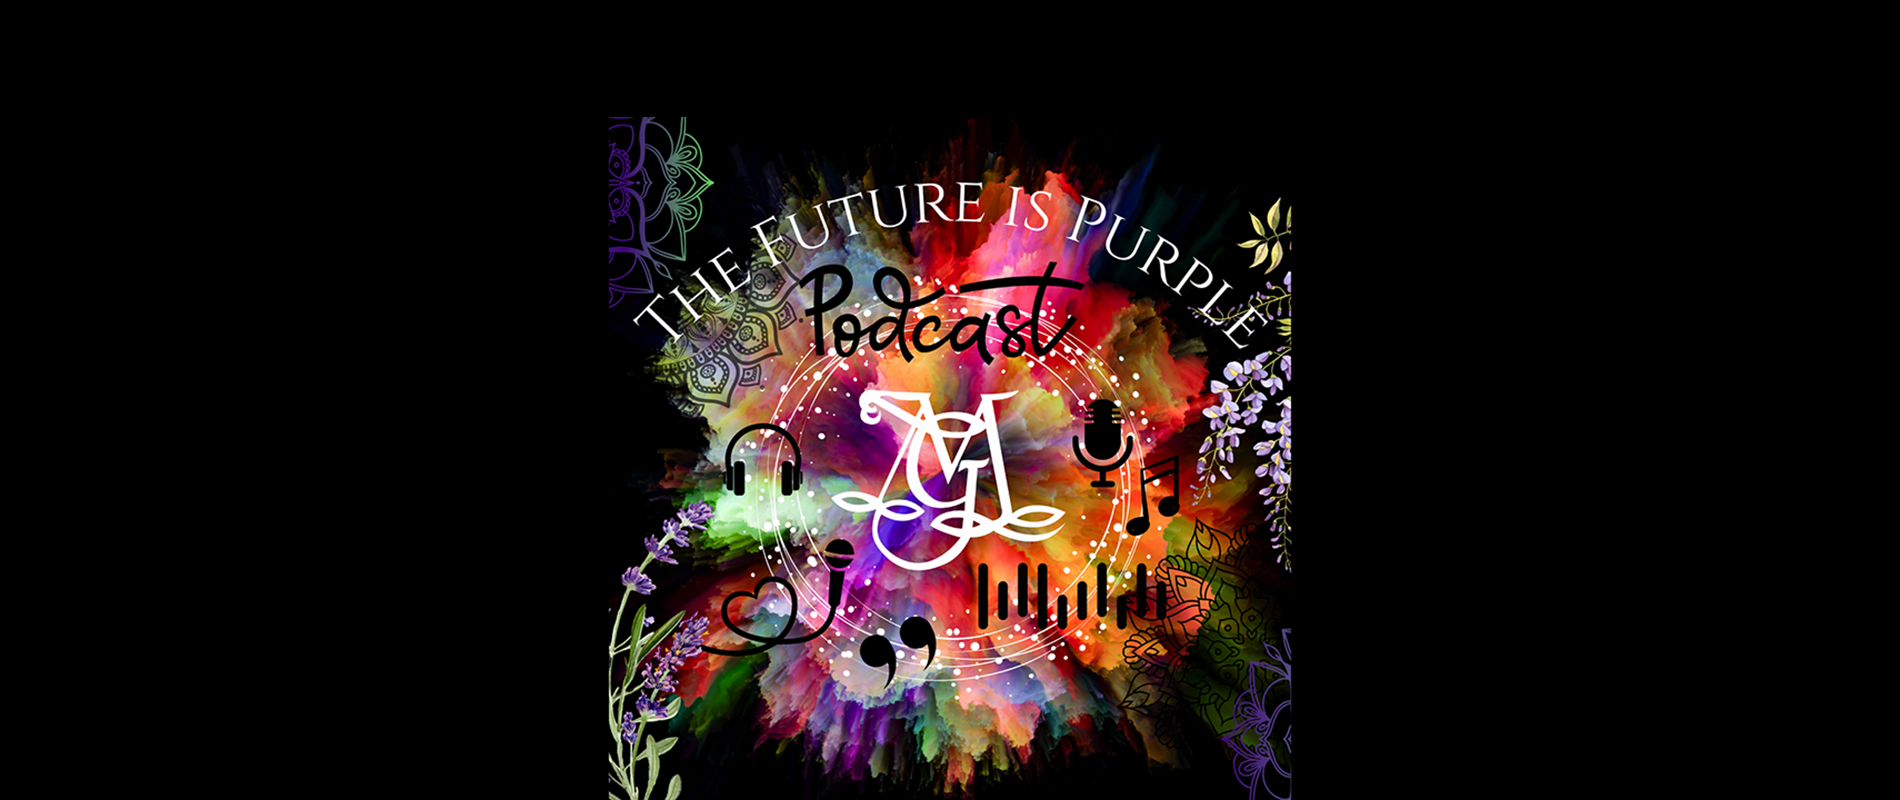 The Future Is Purple Podcast logo